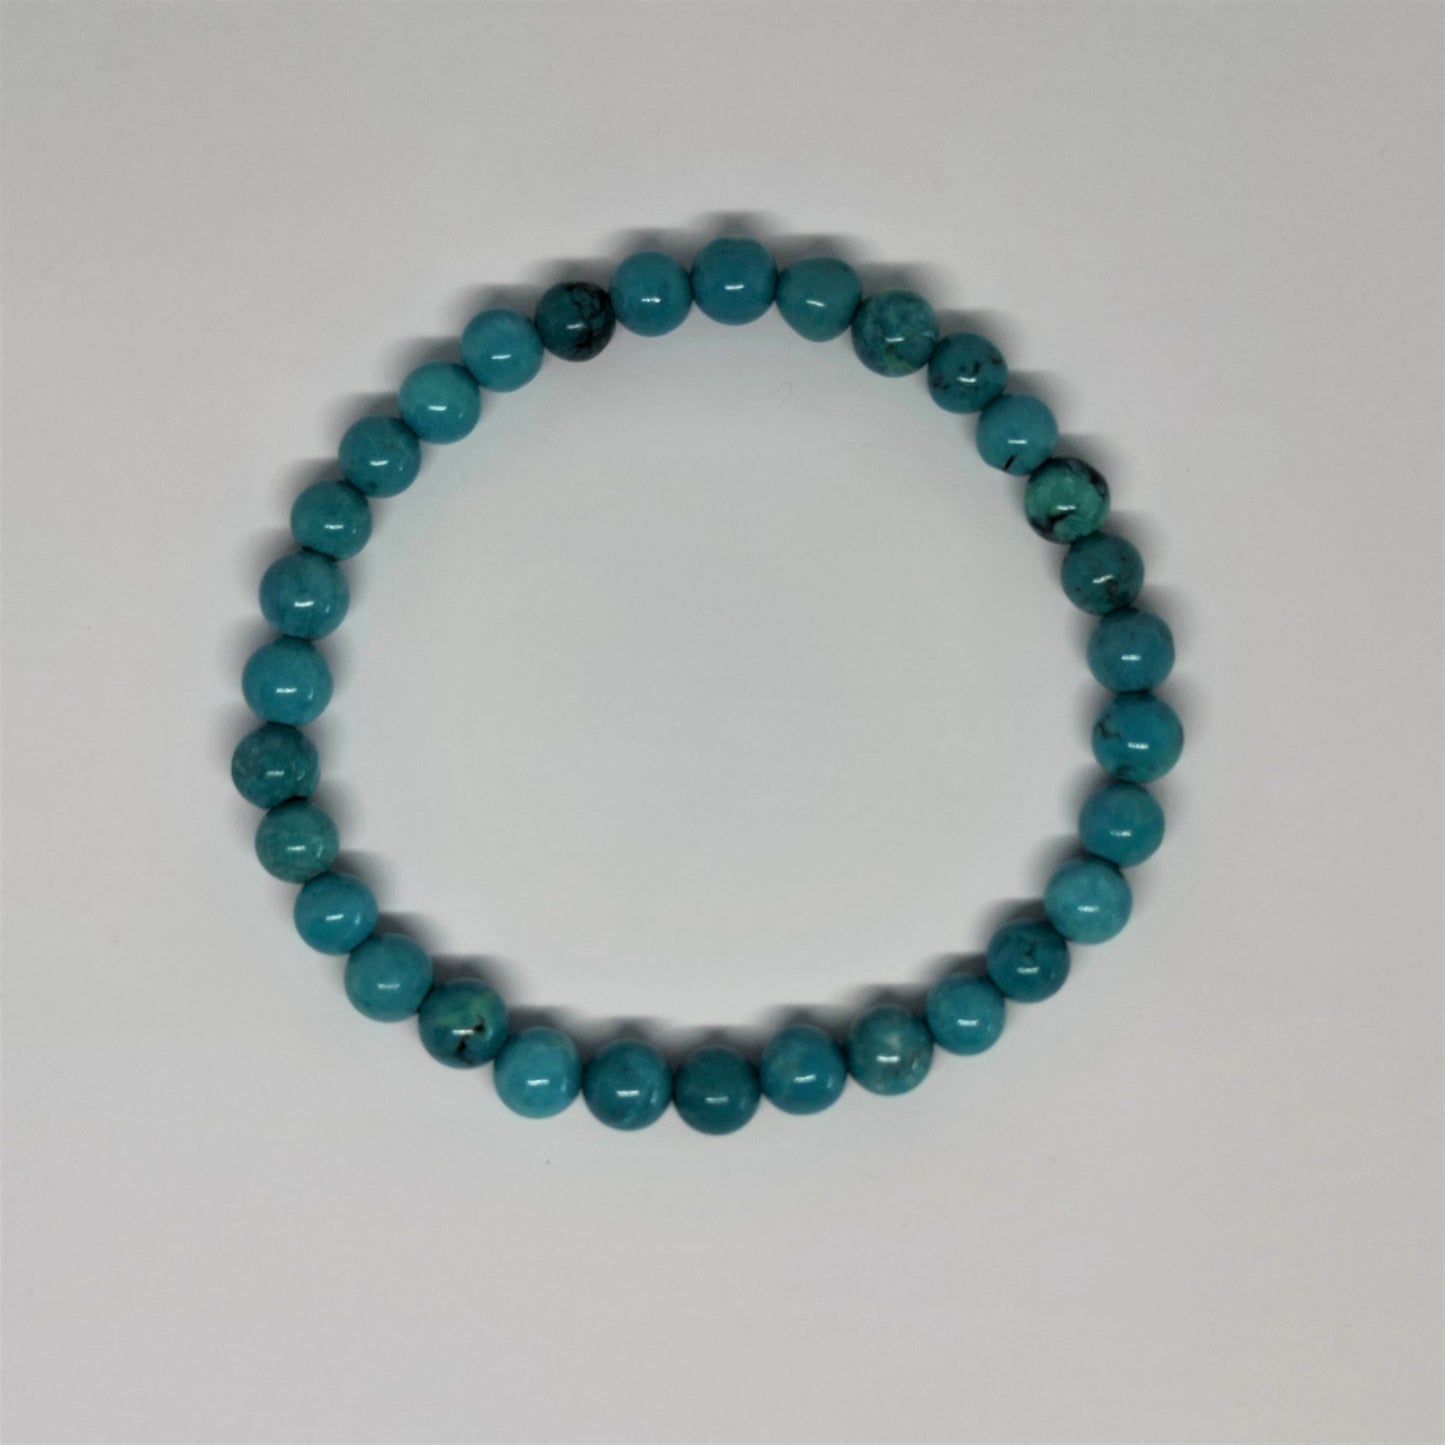 Turquoise Round Bead Crystal Bracelet - Rivendell Shop